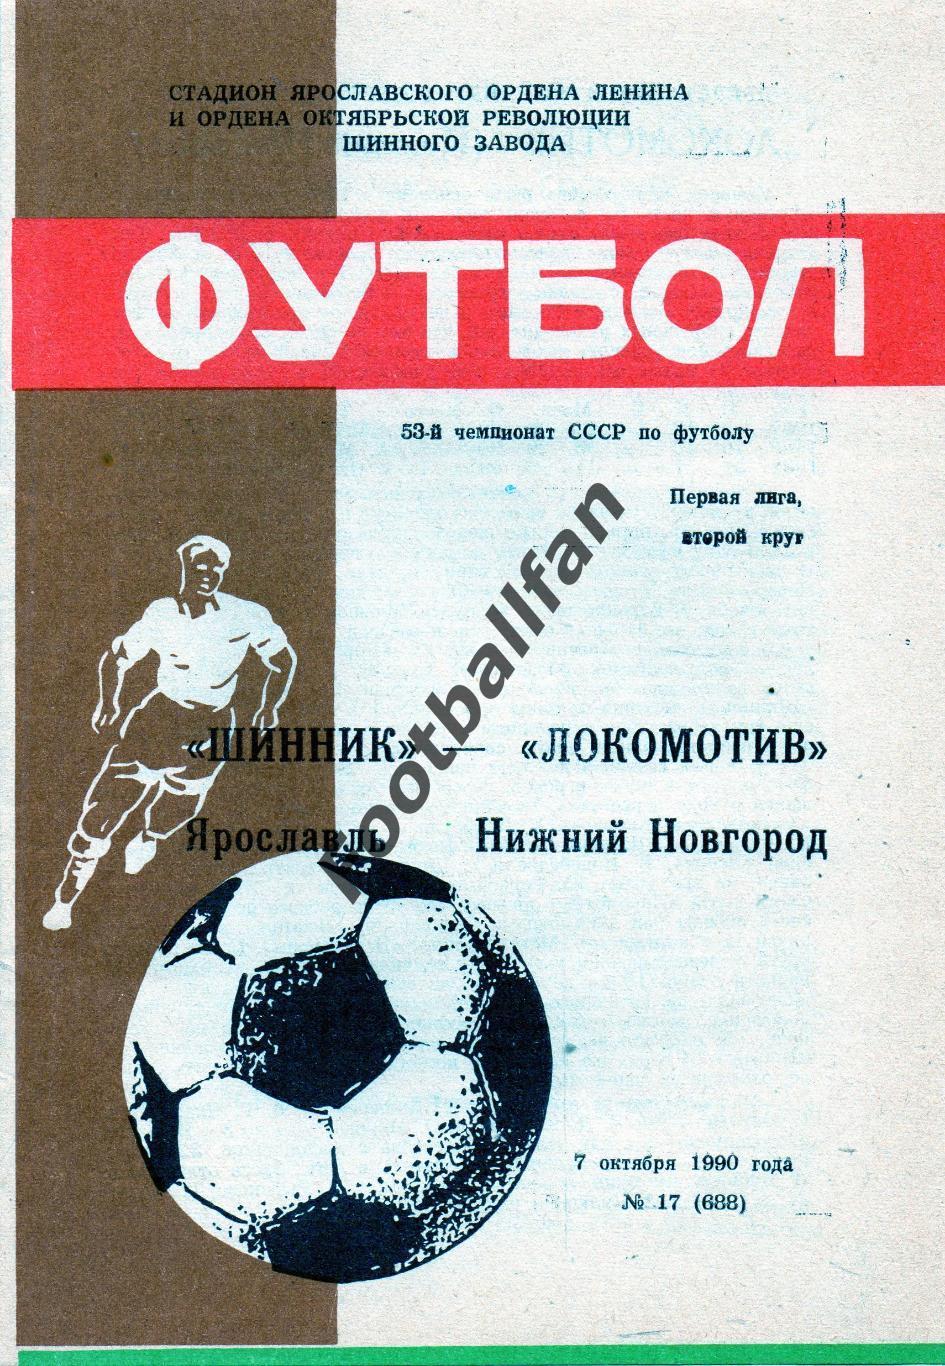 Шинник Ярославль - Локомотив Нижний Новгород 07.10.1990